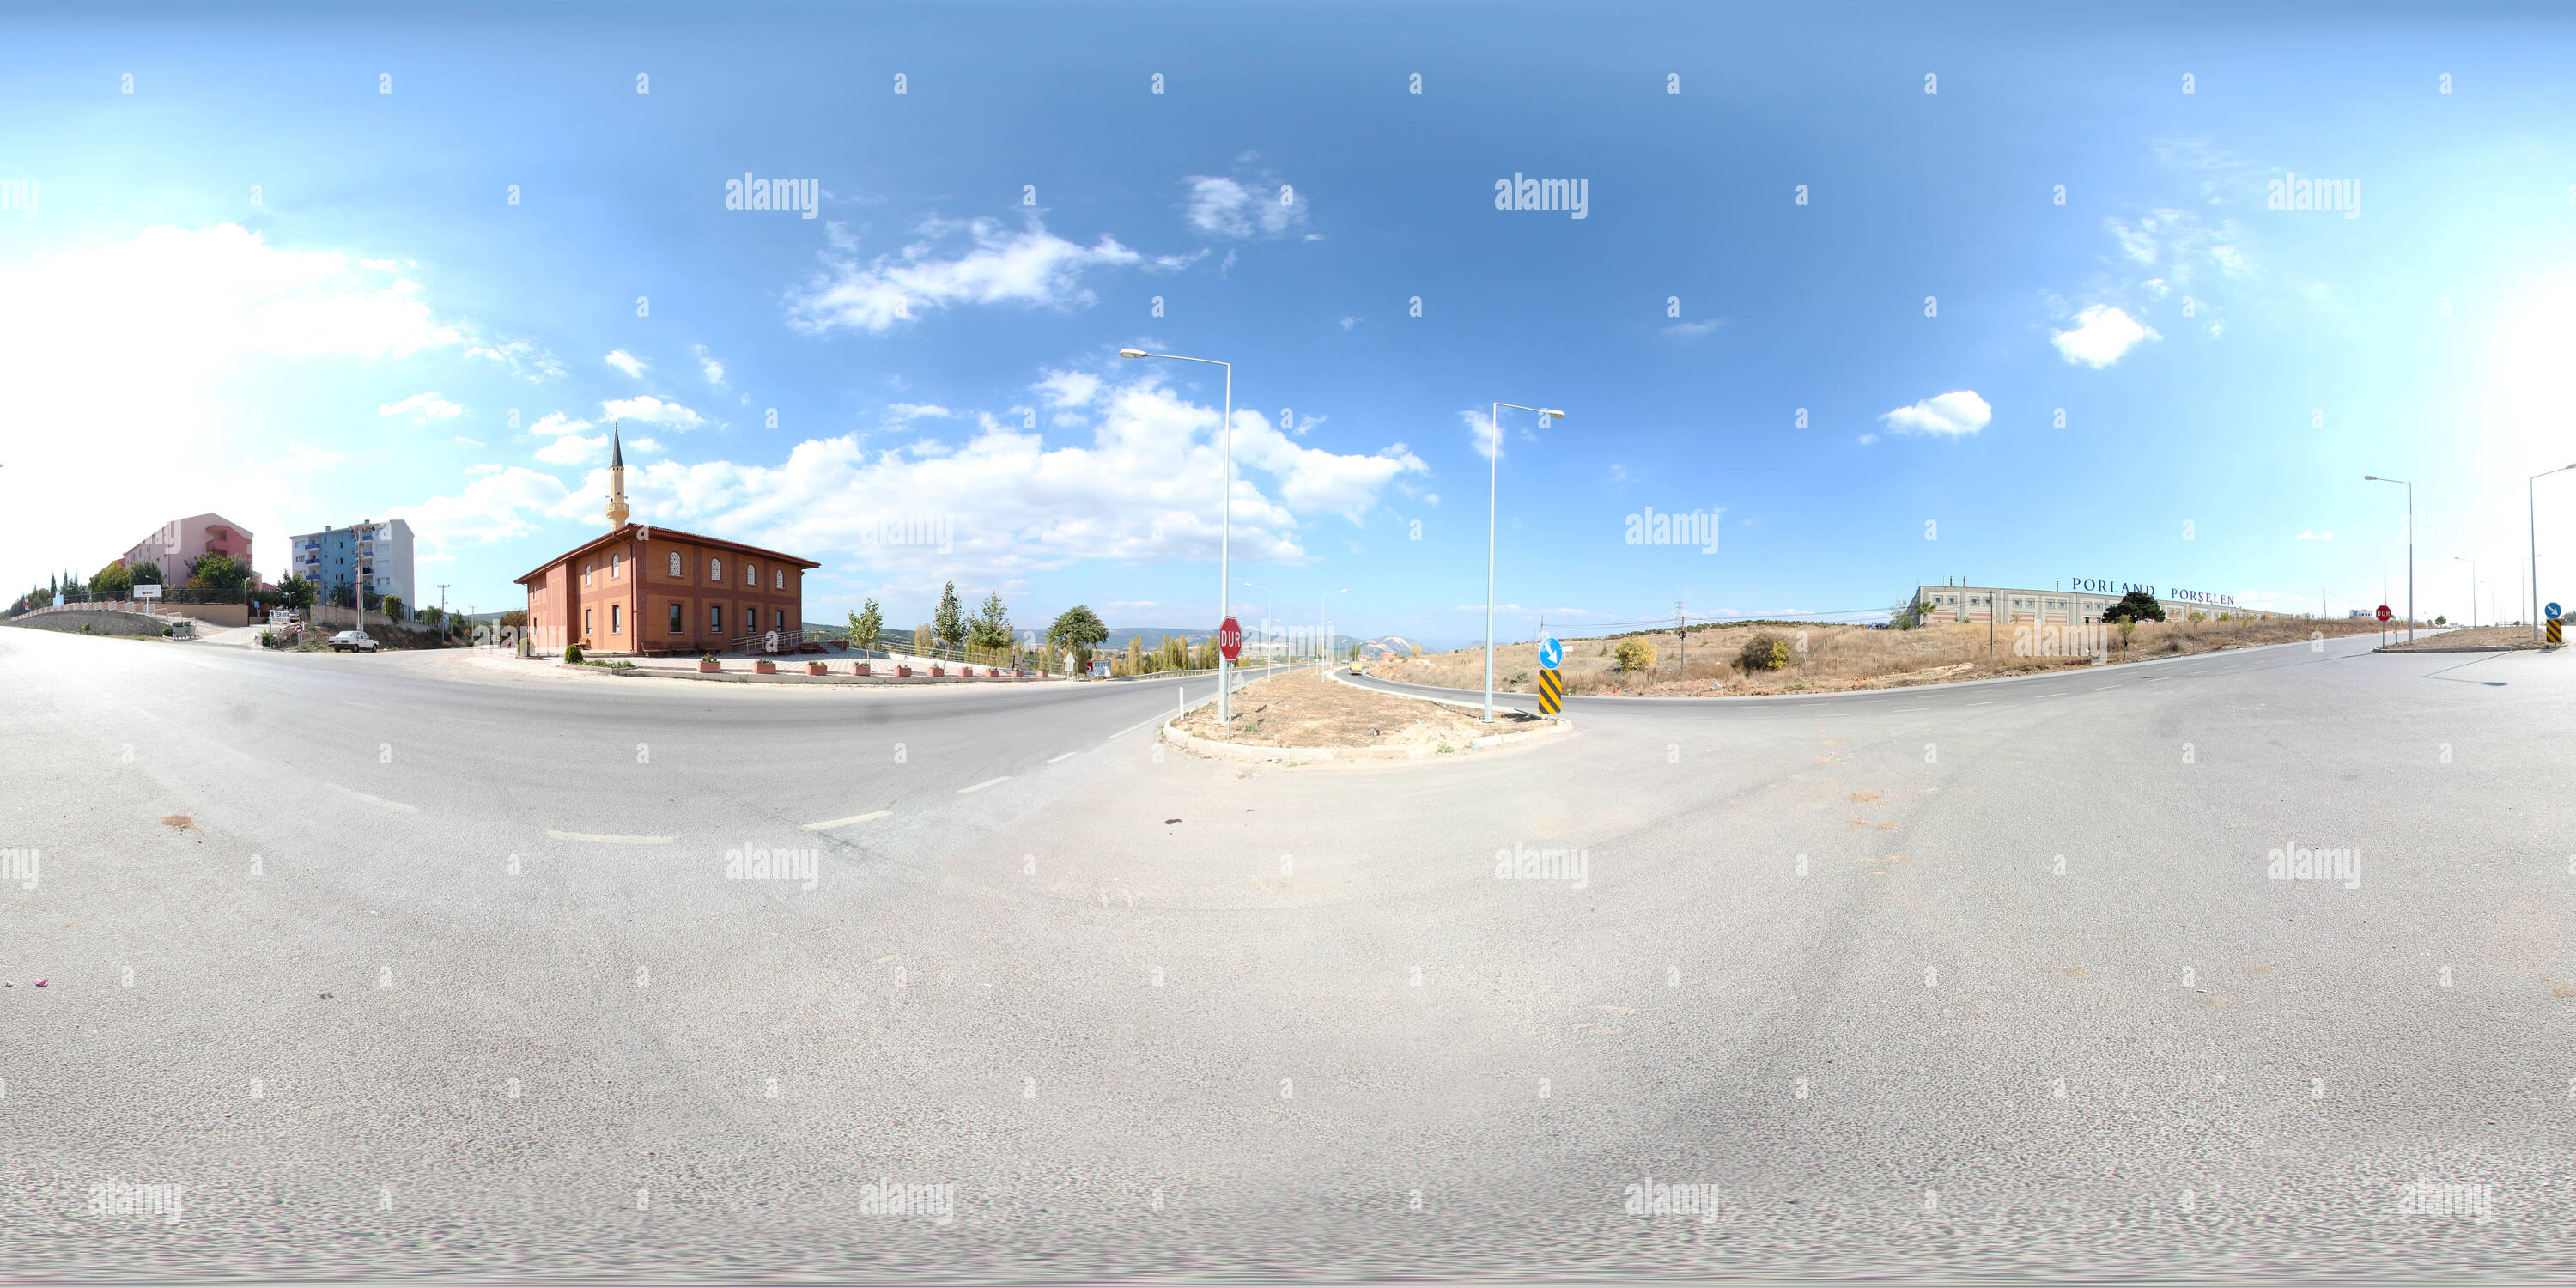 360 Grad Panorama Ansicht von 245814 - eskisehir Yolu - Şehir Girişi - bilecik Sanal Tur